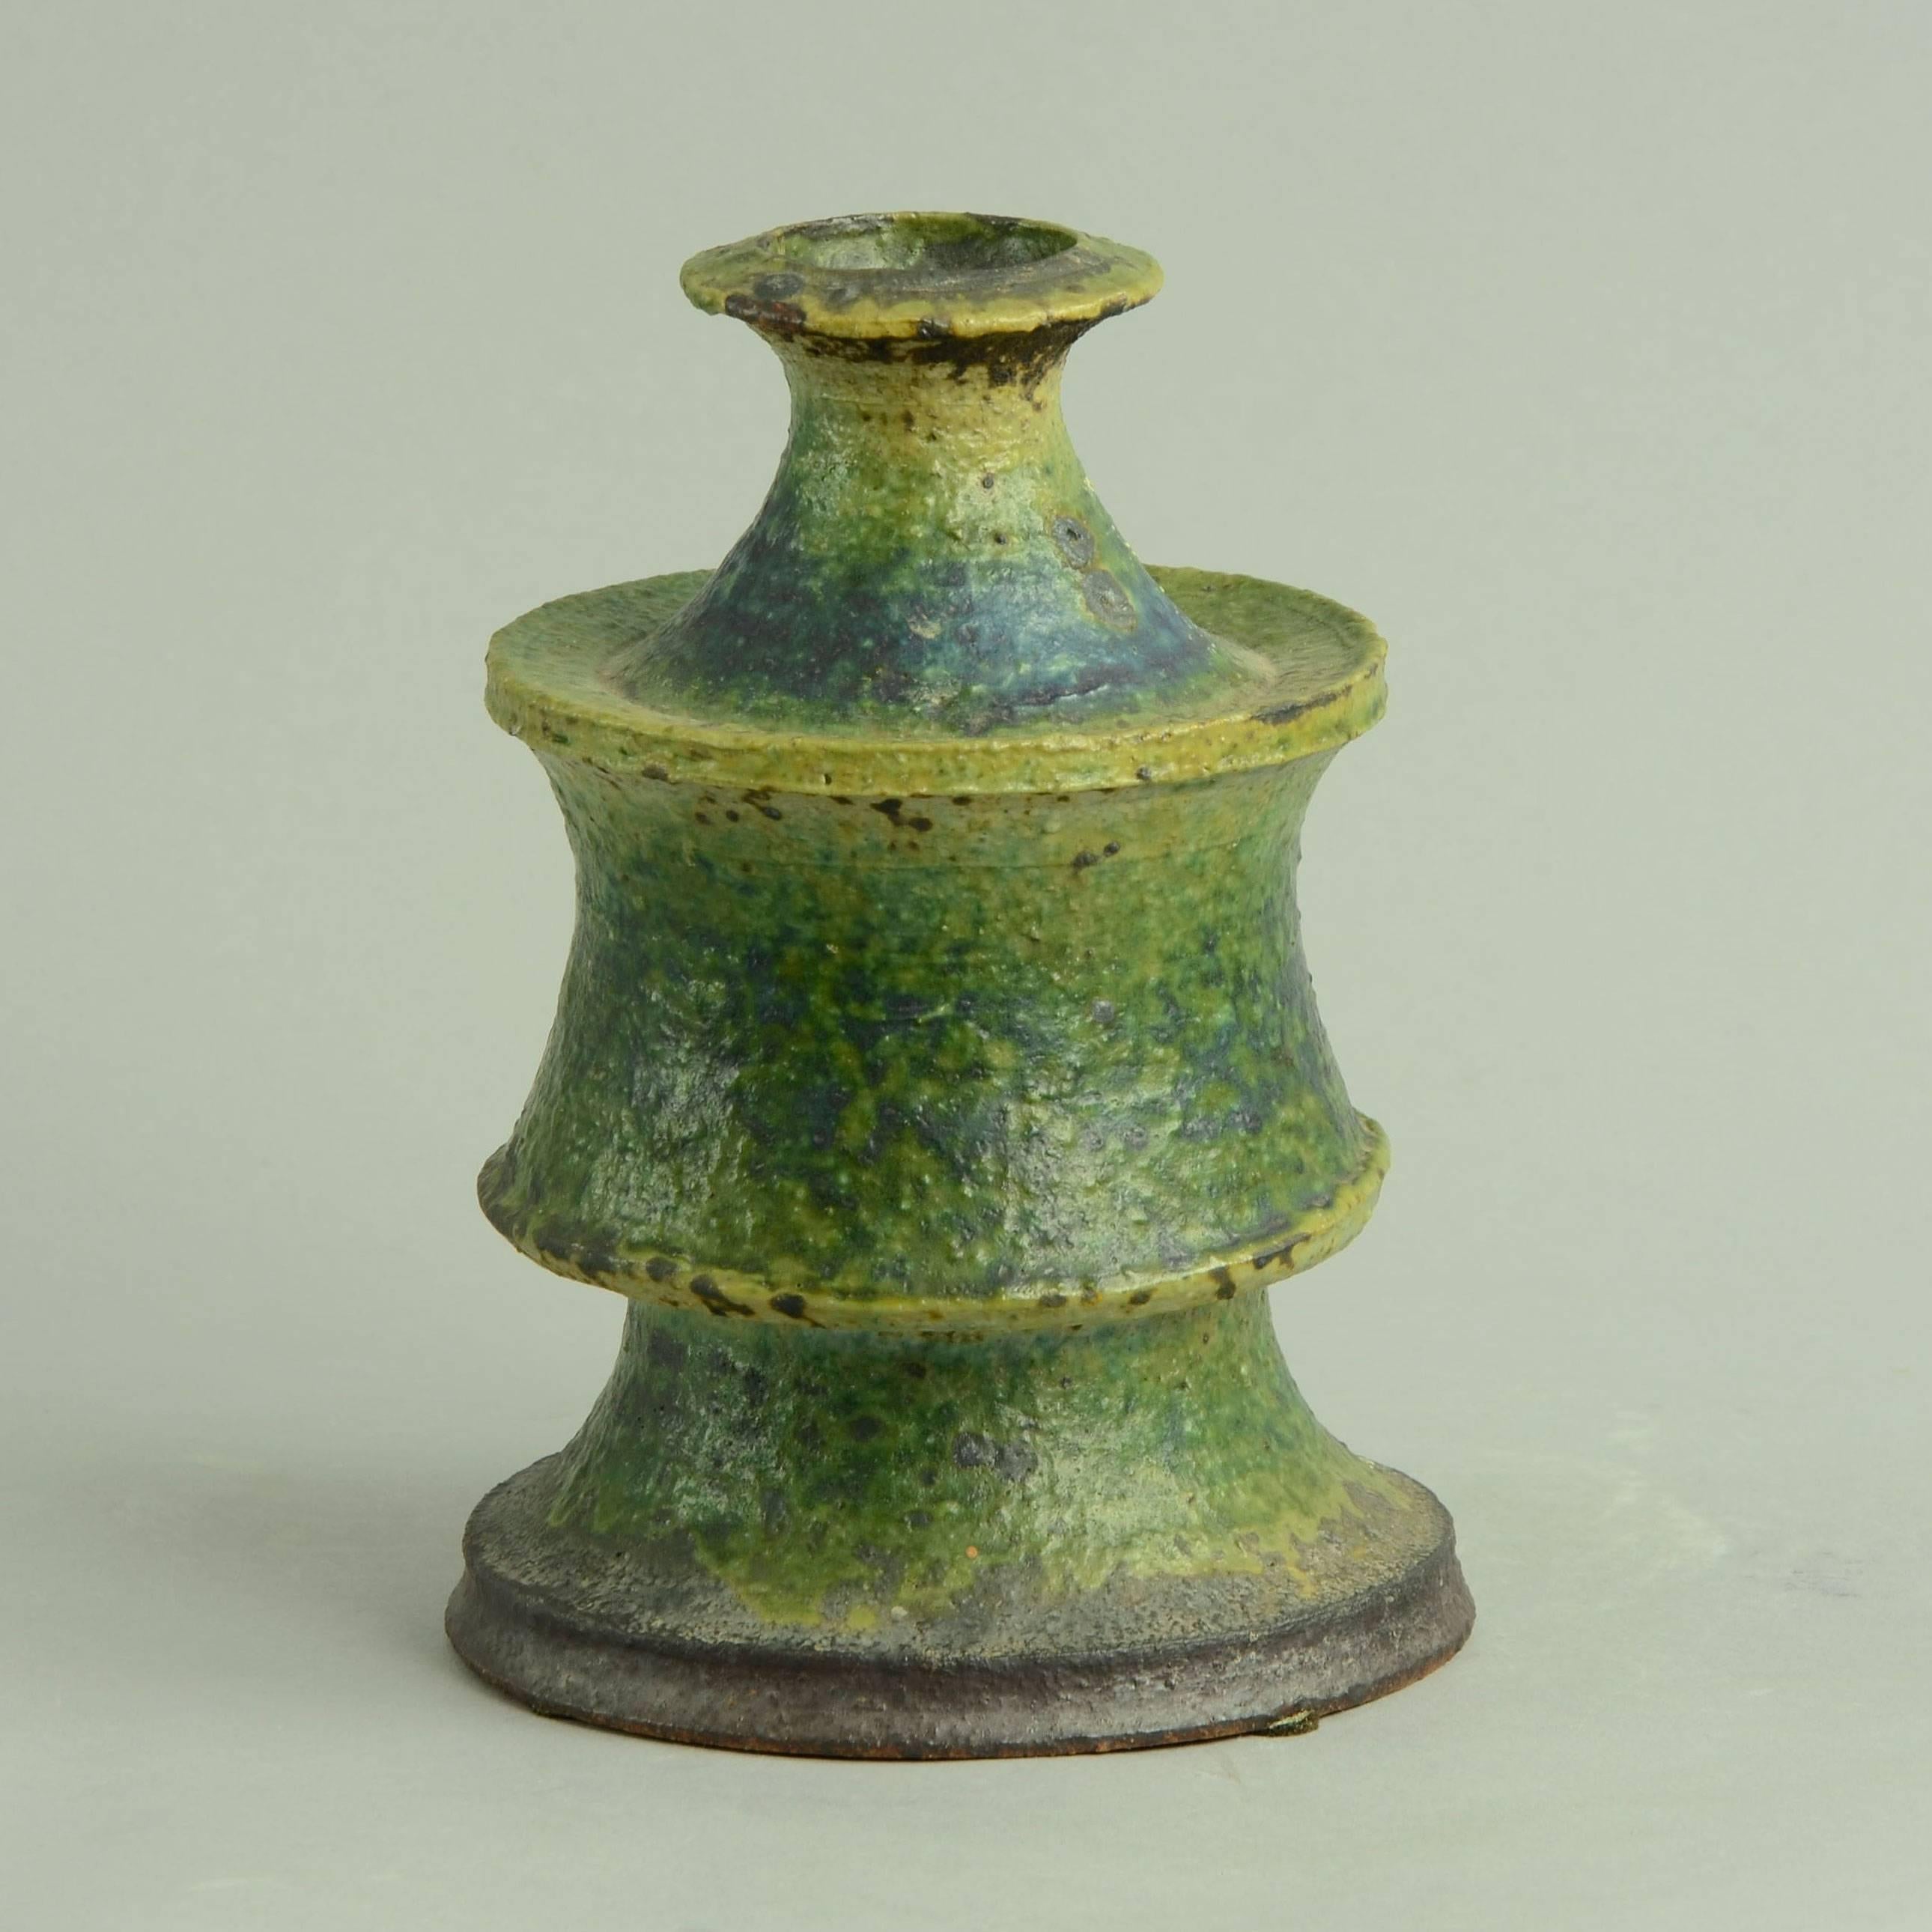 Kyllikki Salmenhaara for Arabia

Unique stoneware vase with matte green and blue glaze, 1950s.
Measures: Height 7